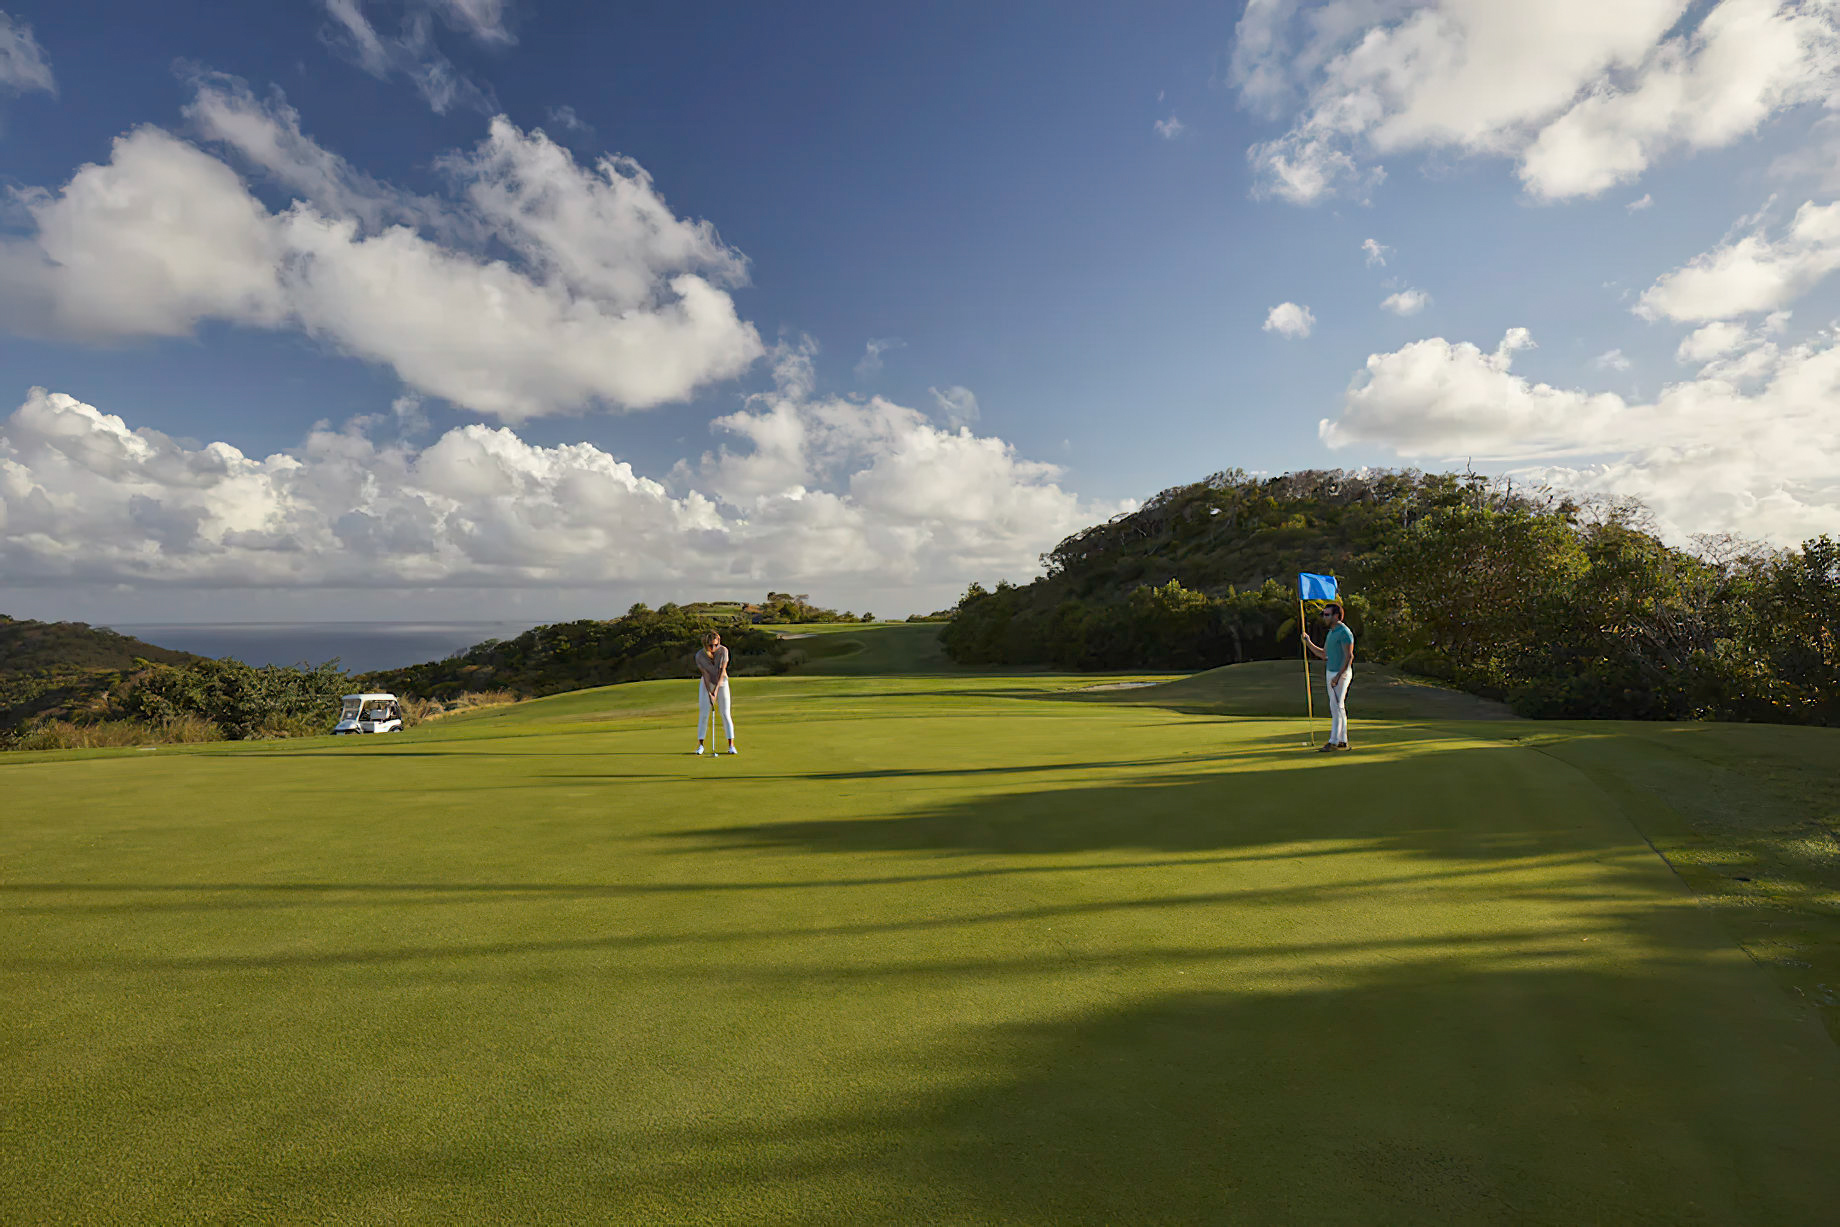 Mandarin Oriental, Canouan Island Resort – Saint Vincent and the Grenadines – Golf Course